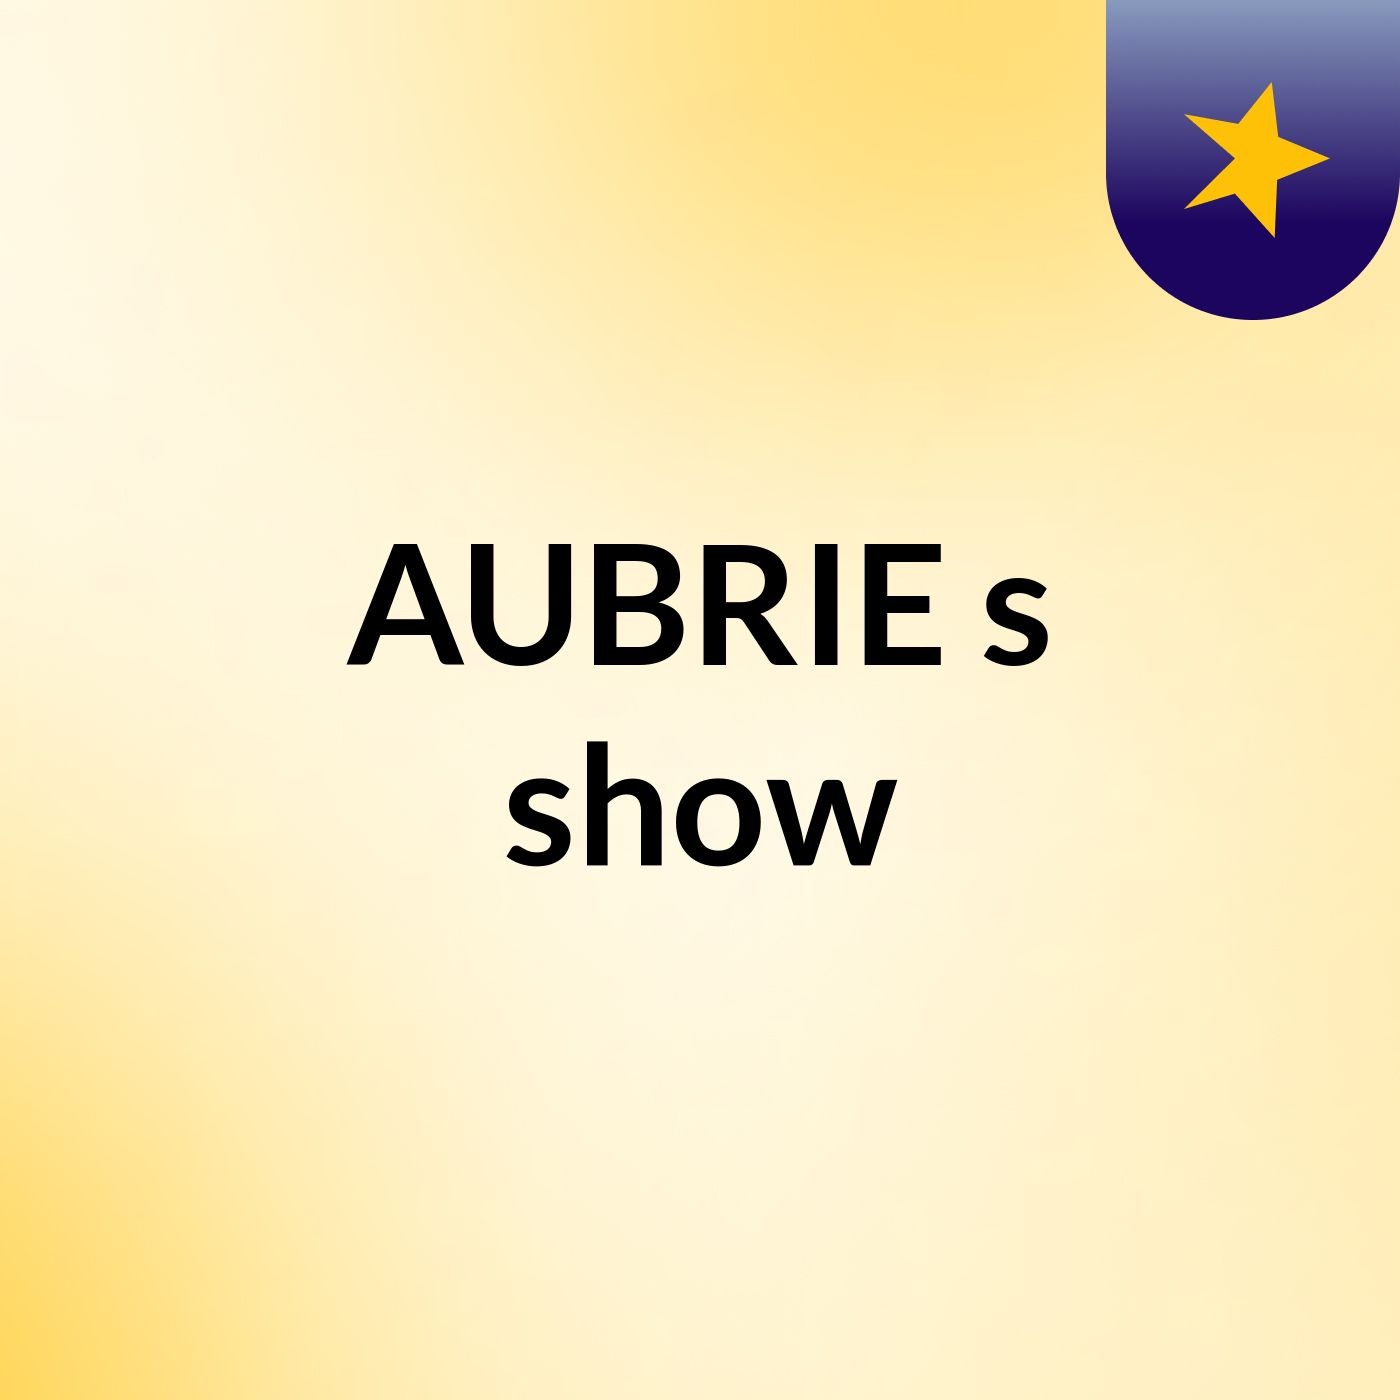 AUBRIE's show